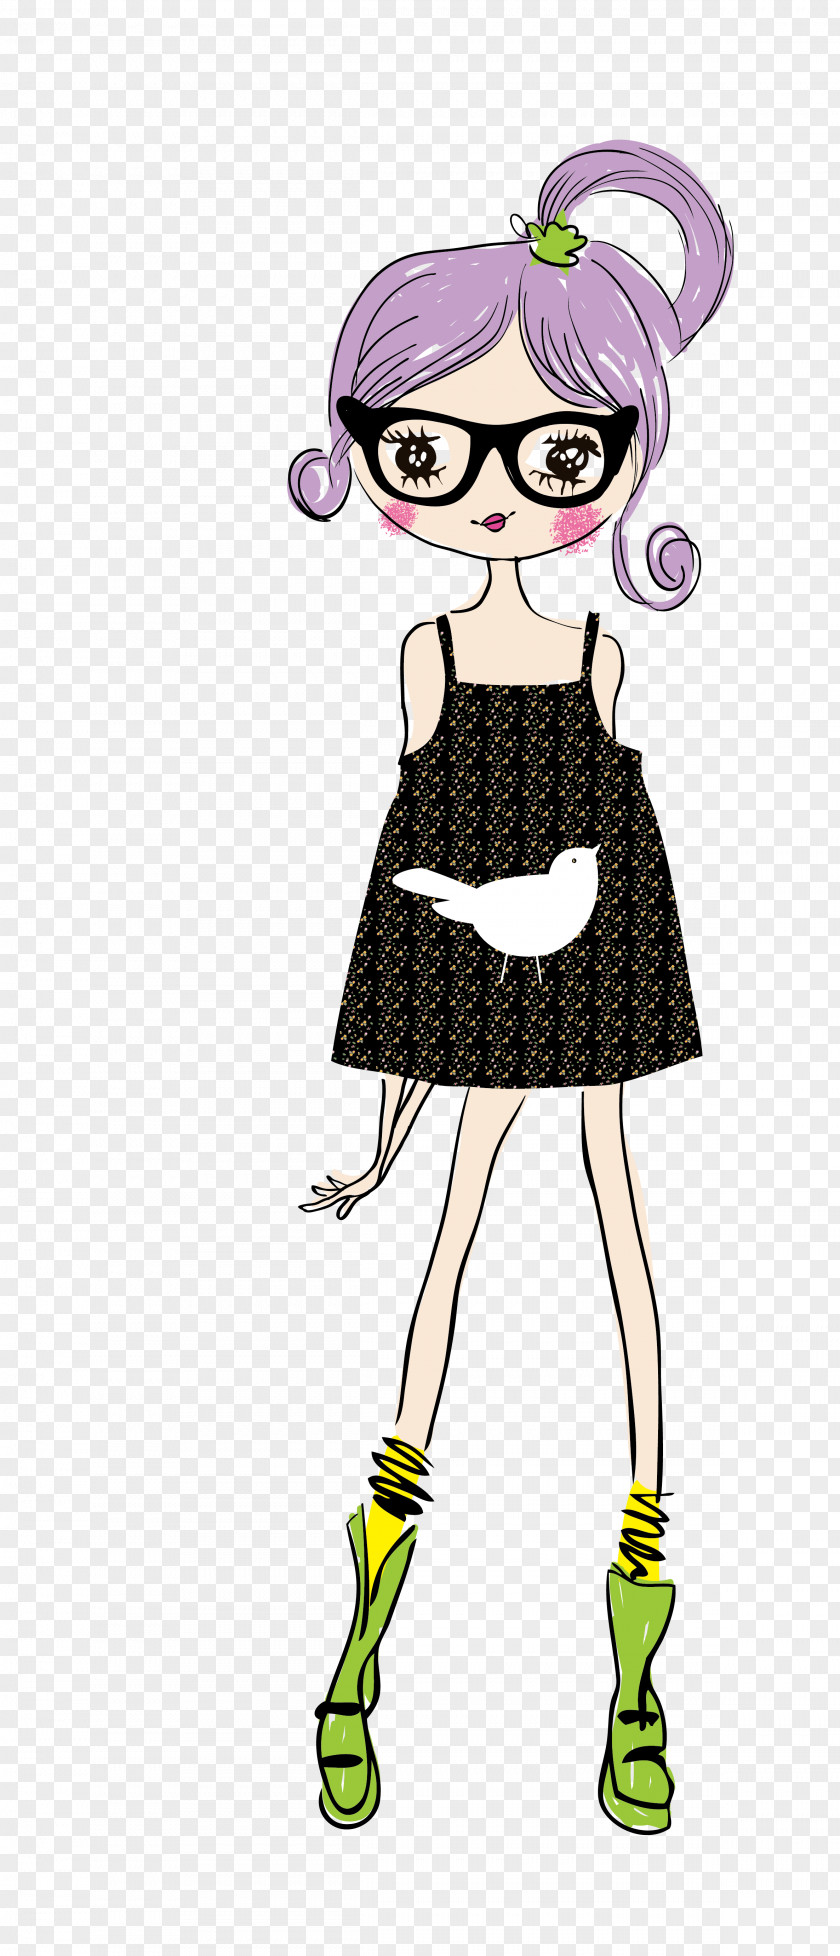 Cartoon Drawing Animation Girl Illustration PNG Illustration, Cute girls, female in black spaghetti strap dress illustration clipart PNG